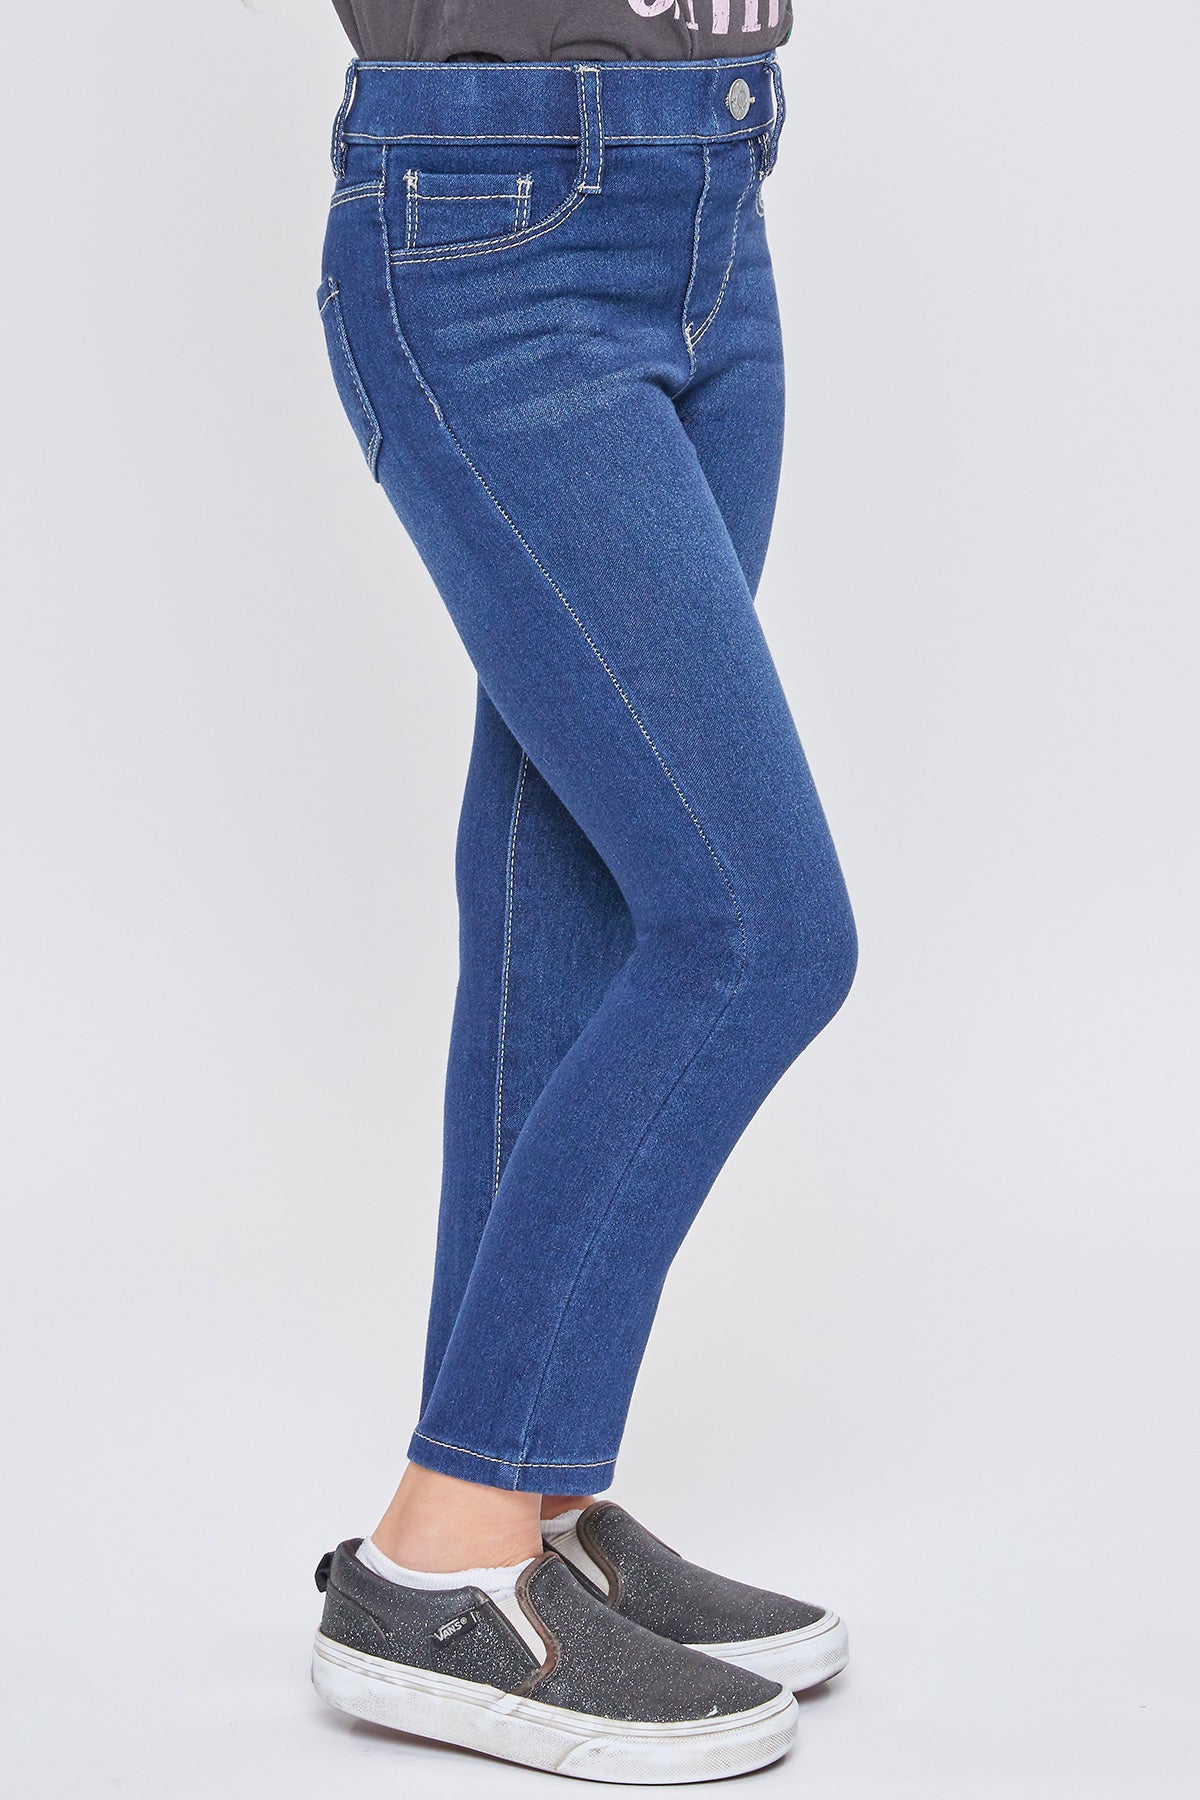 Buy Girls Blue Marble Print Straight Jeans Online at Sassafras